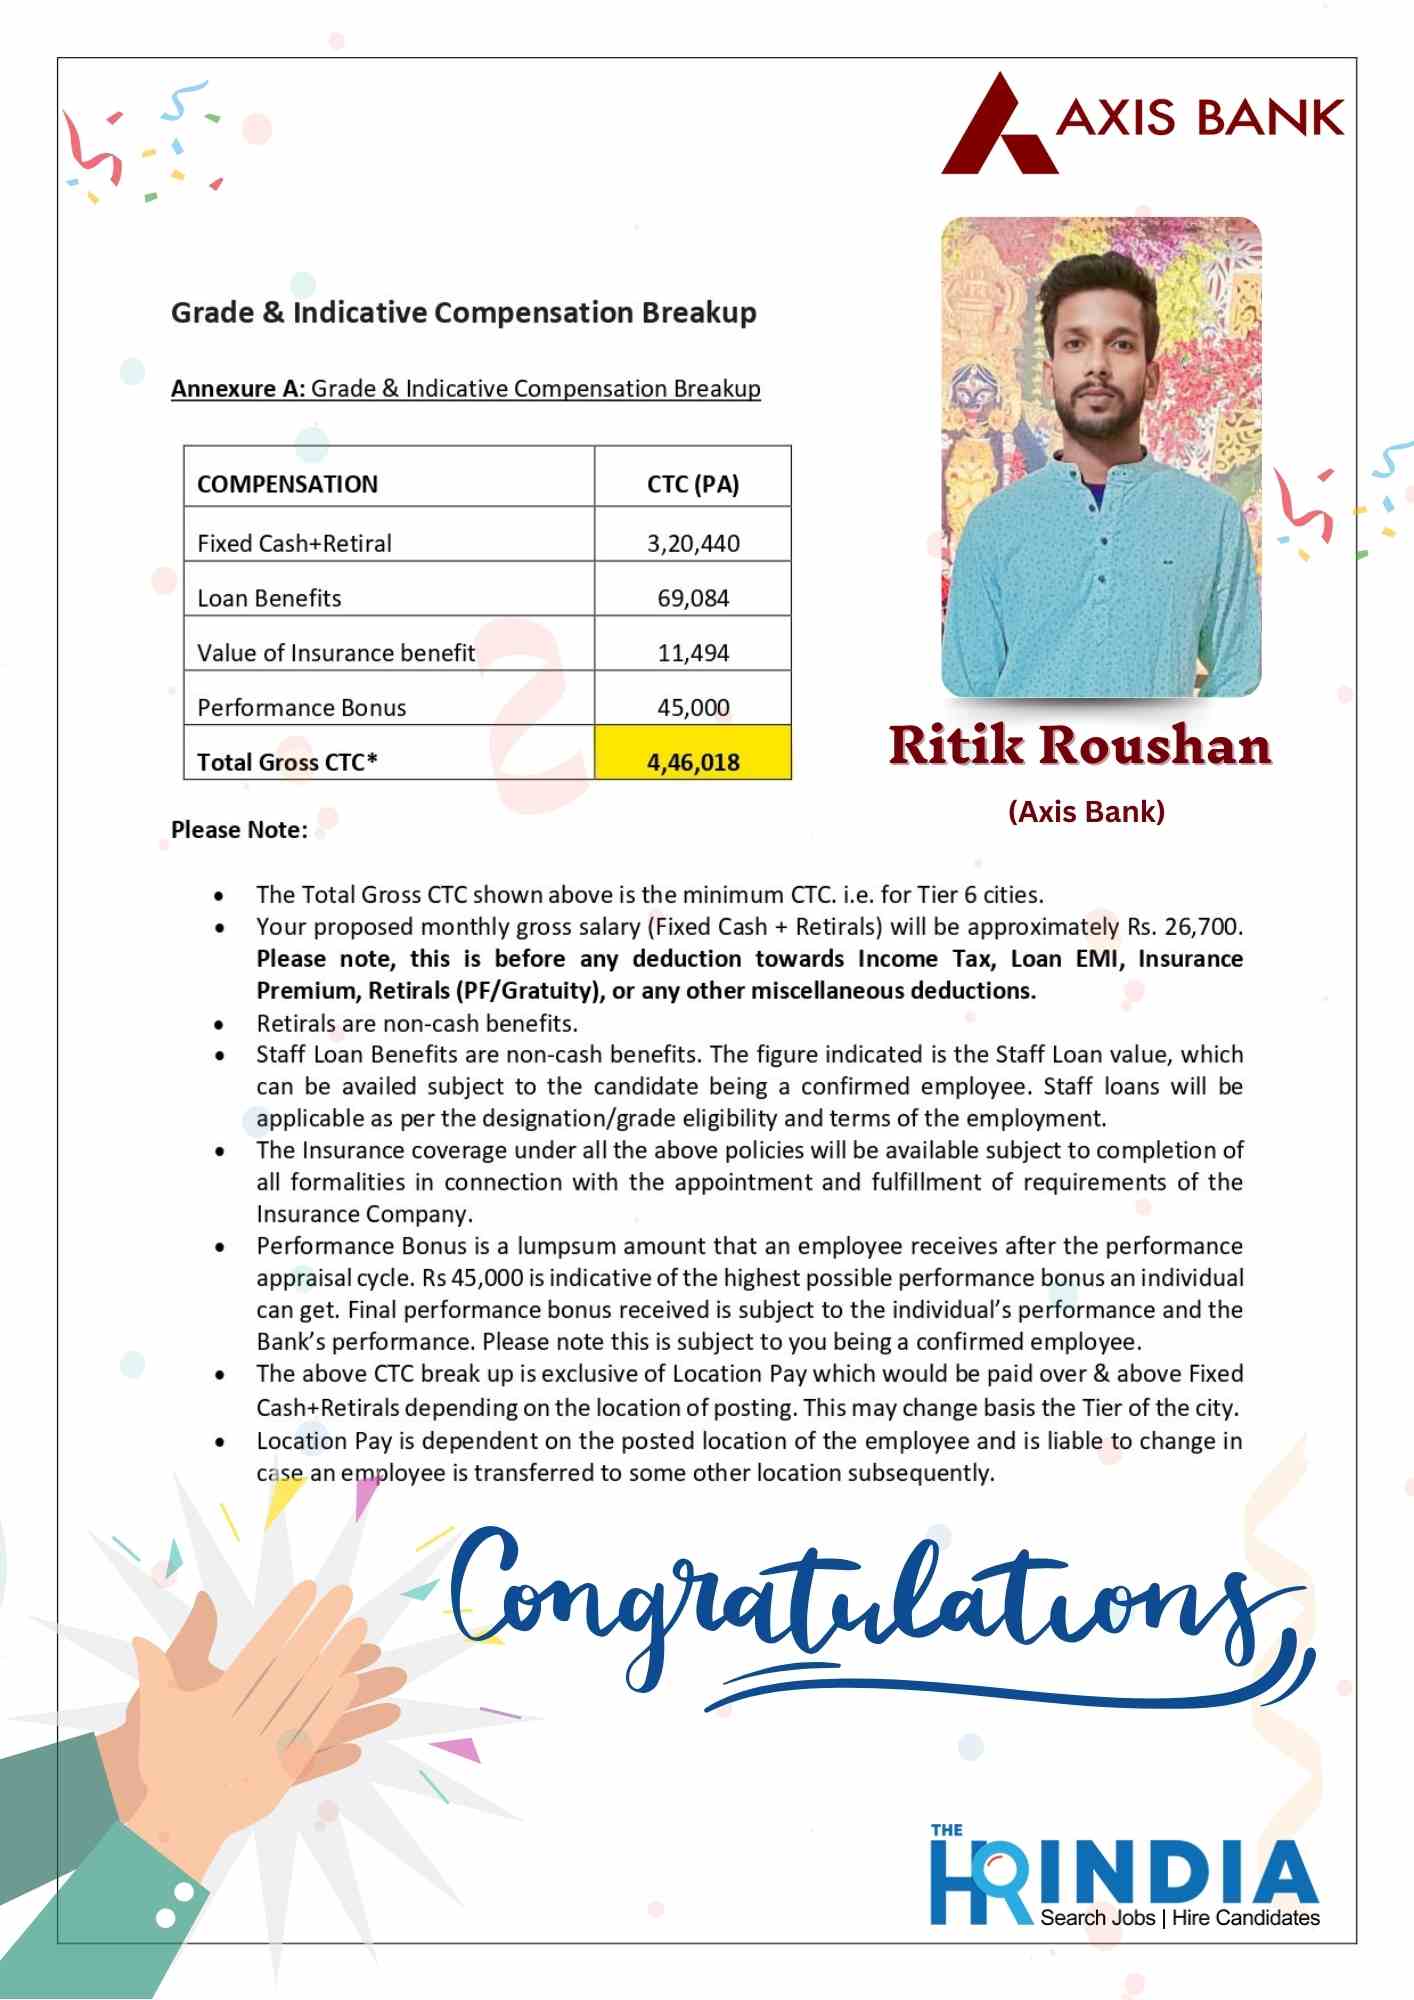 Ritik Roushan (1)  | The HR India